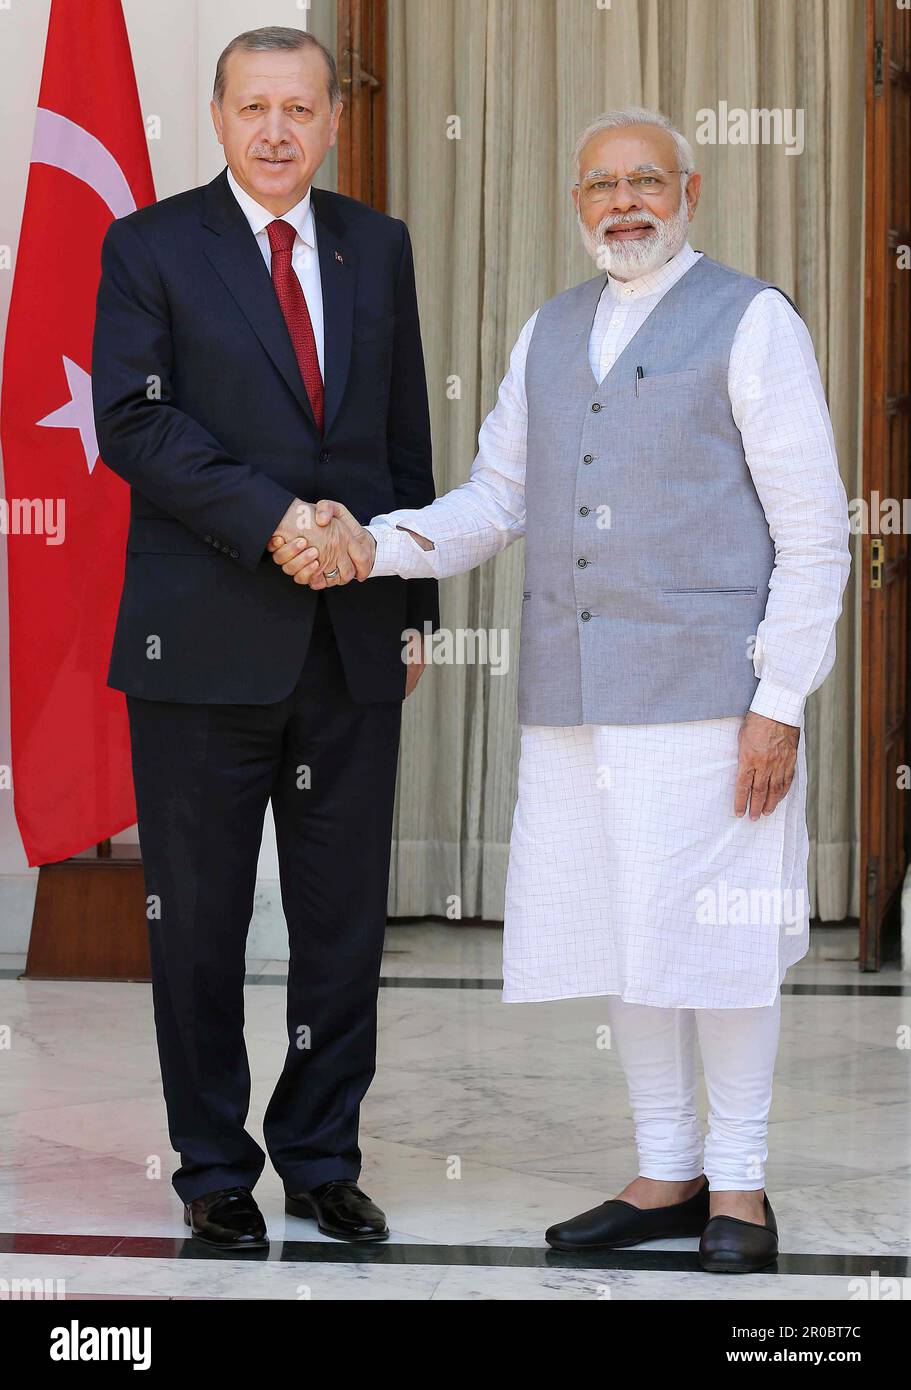 Recep Tayyip Erdogan, politicien turc, président de la Turquie, Narendra Modi, Premier ministre indien, New Delhi, Inde, 1 mai 2017 Banque D'Images